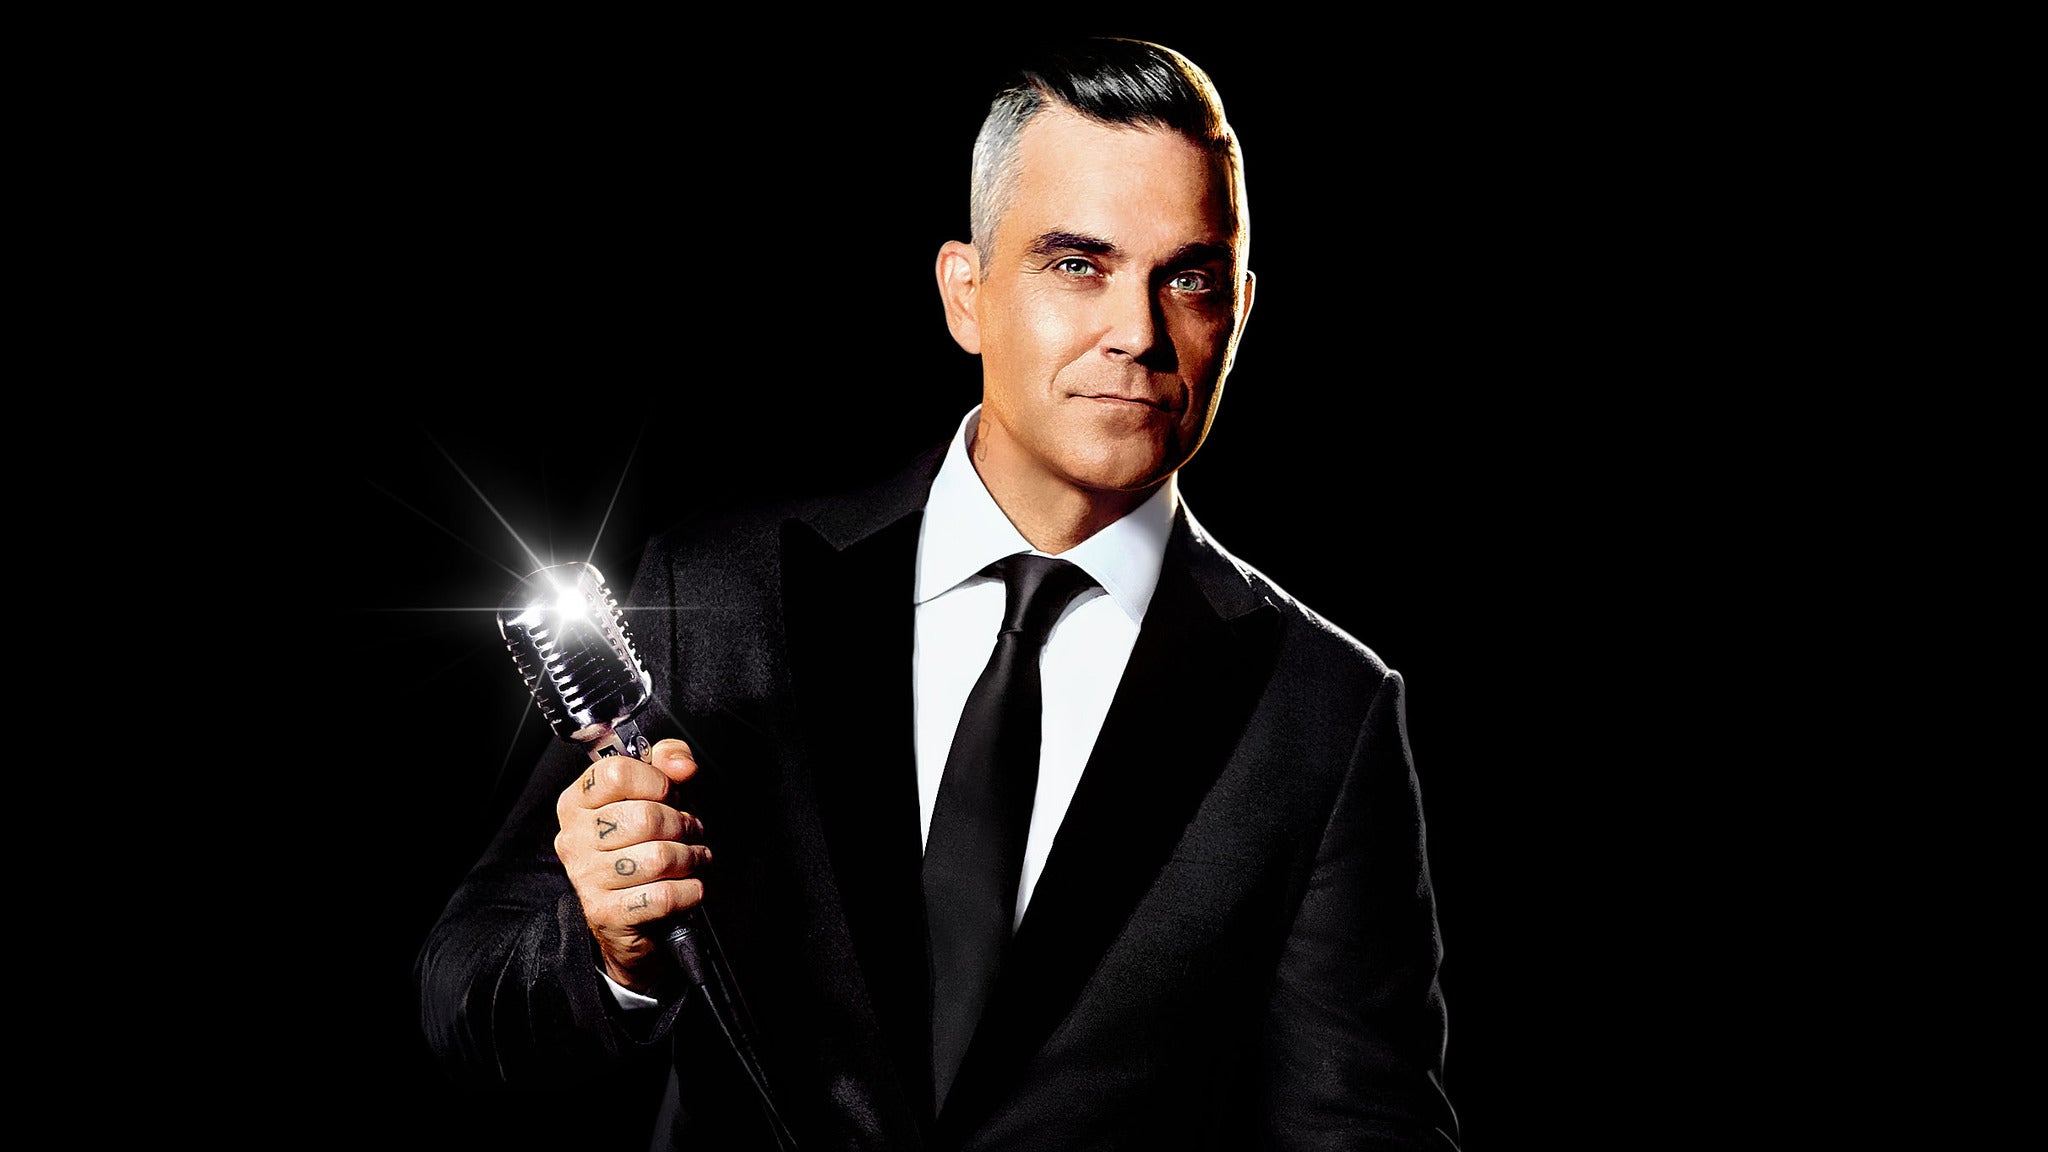 Robbie Williams Live in Las Vegas in Las Vegas promo photo for Exclusive presale offer code